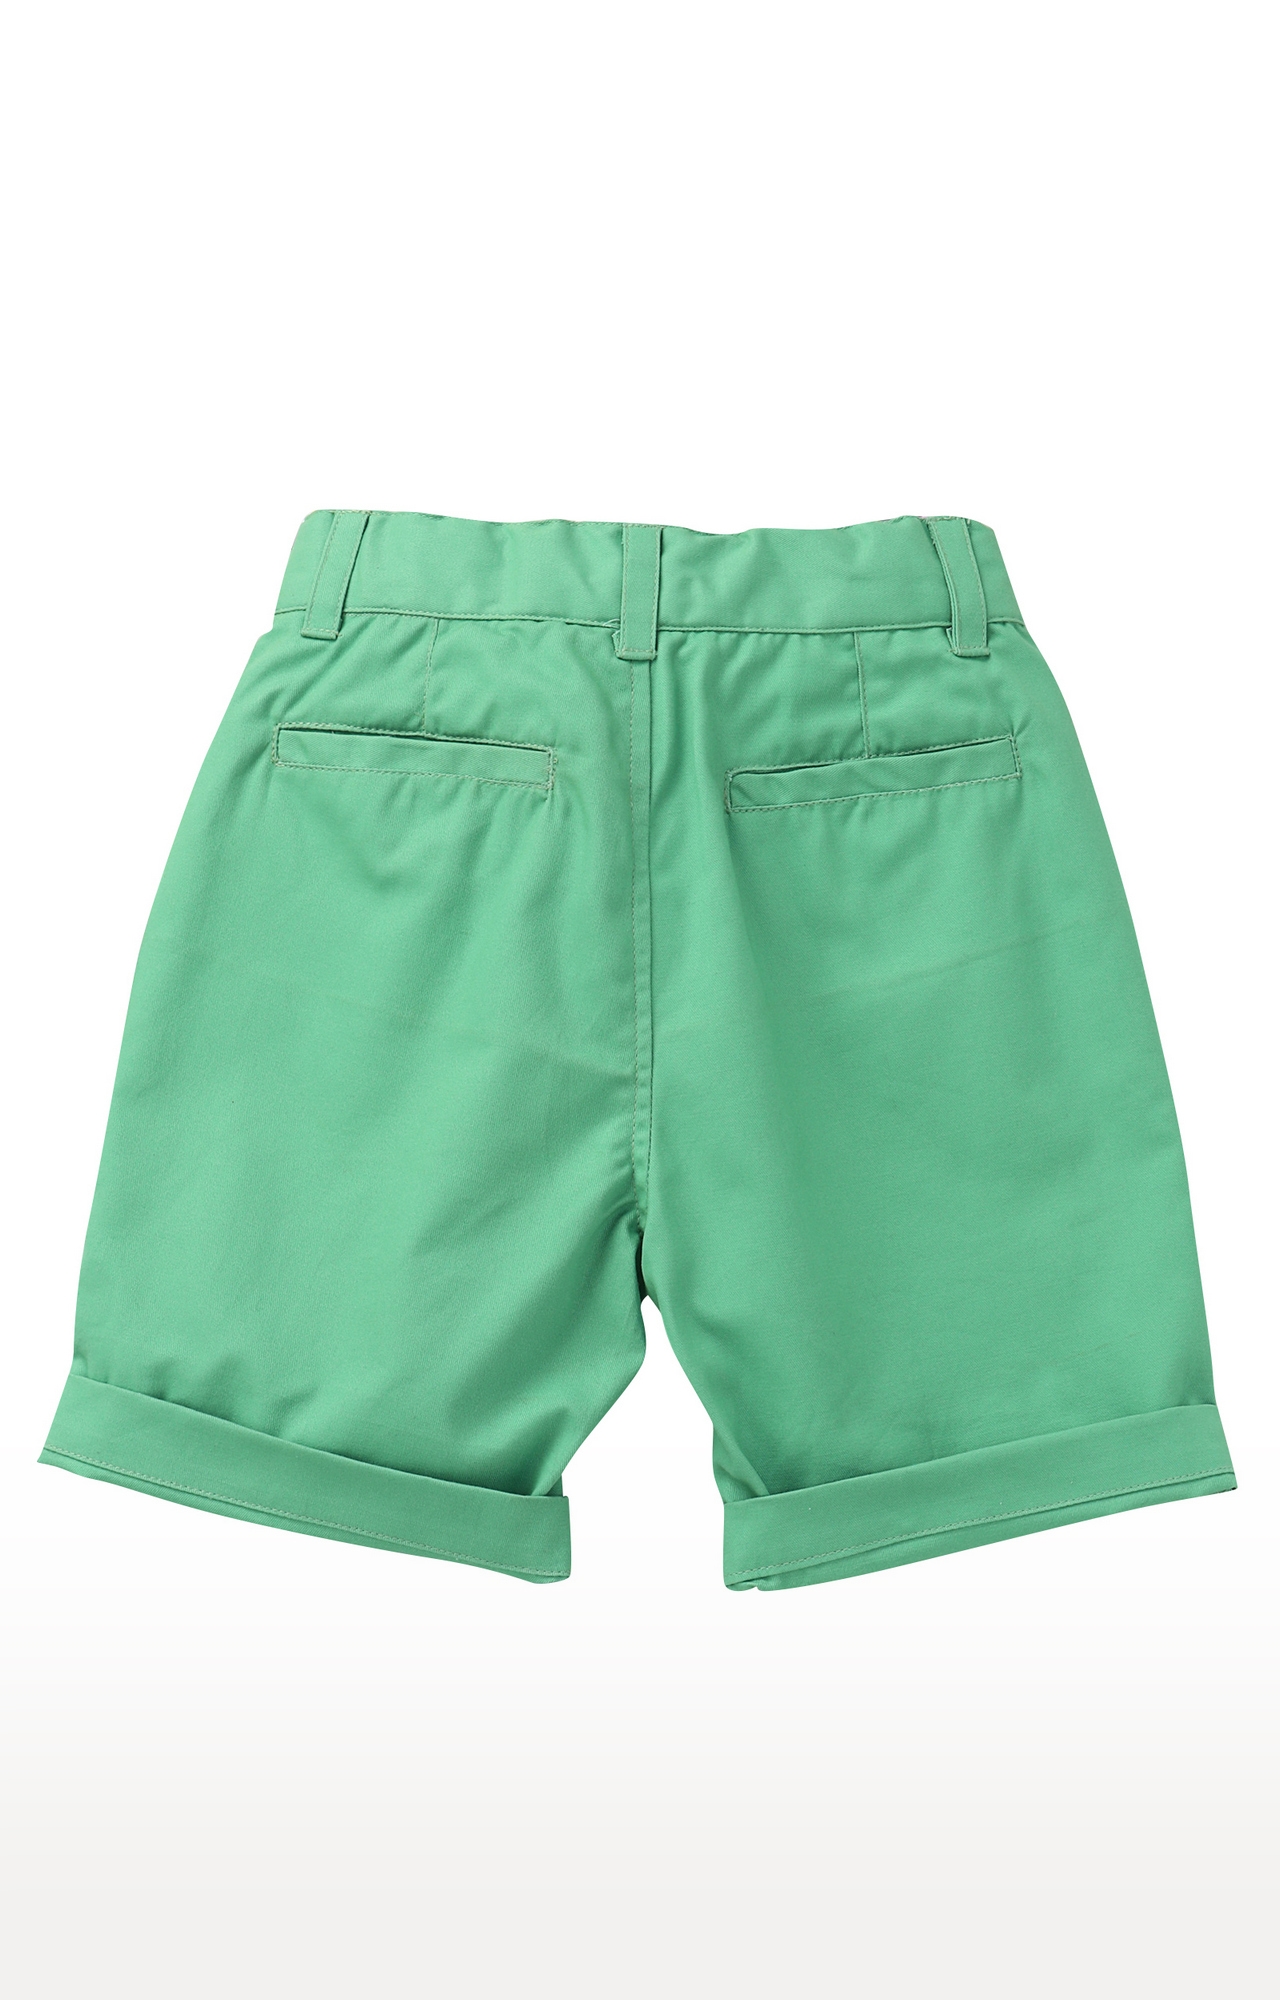 Popsicles Clothing | Popsicles Shamrock Shorts Regular Fit For Boys 1